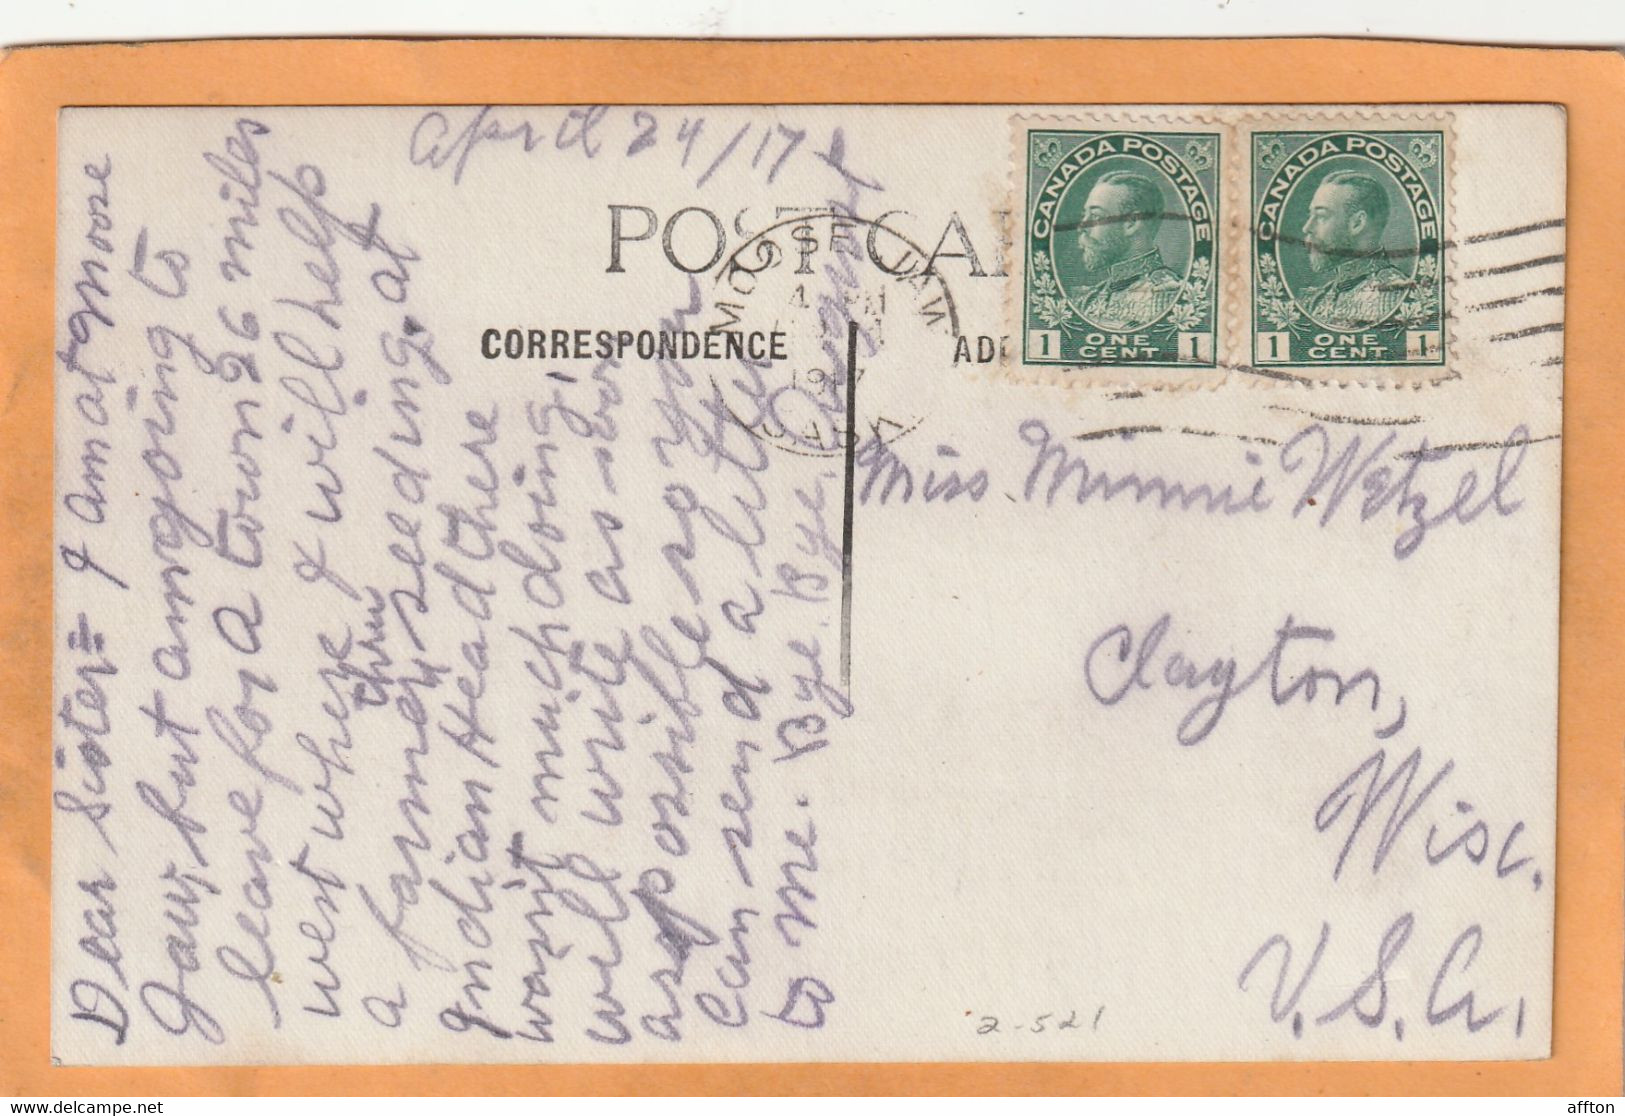 Moose Jaw Saskatchewan Canada 1917 Real Photo Postcard - Other & Unclassified